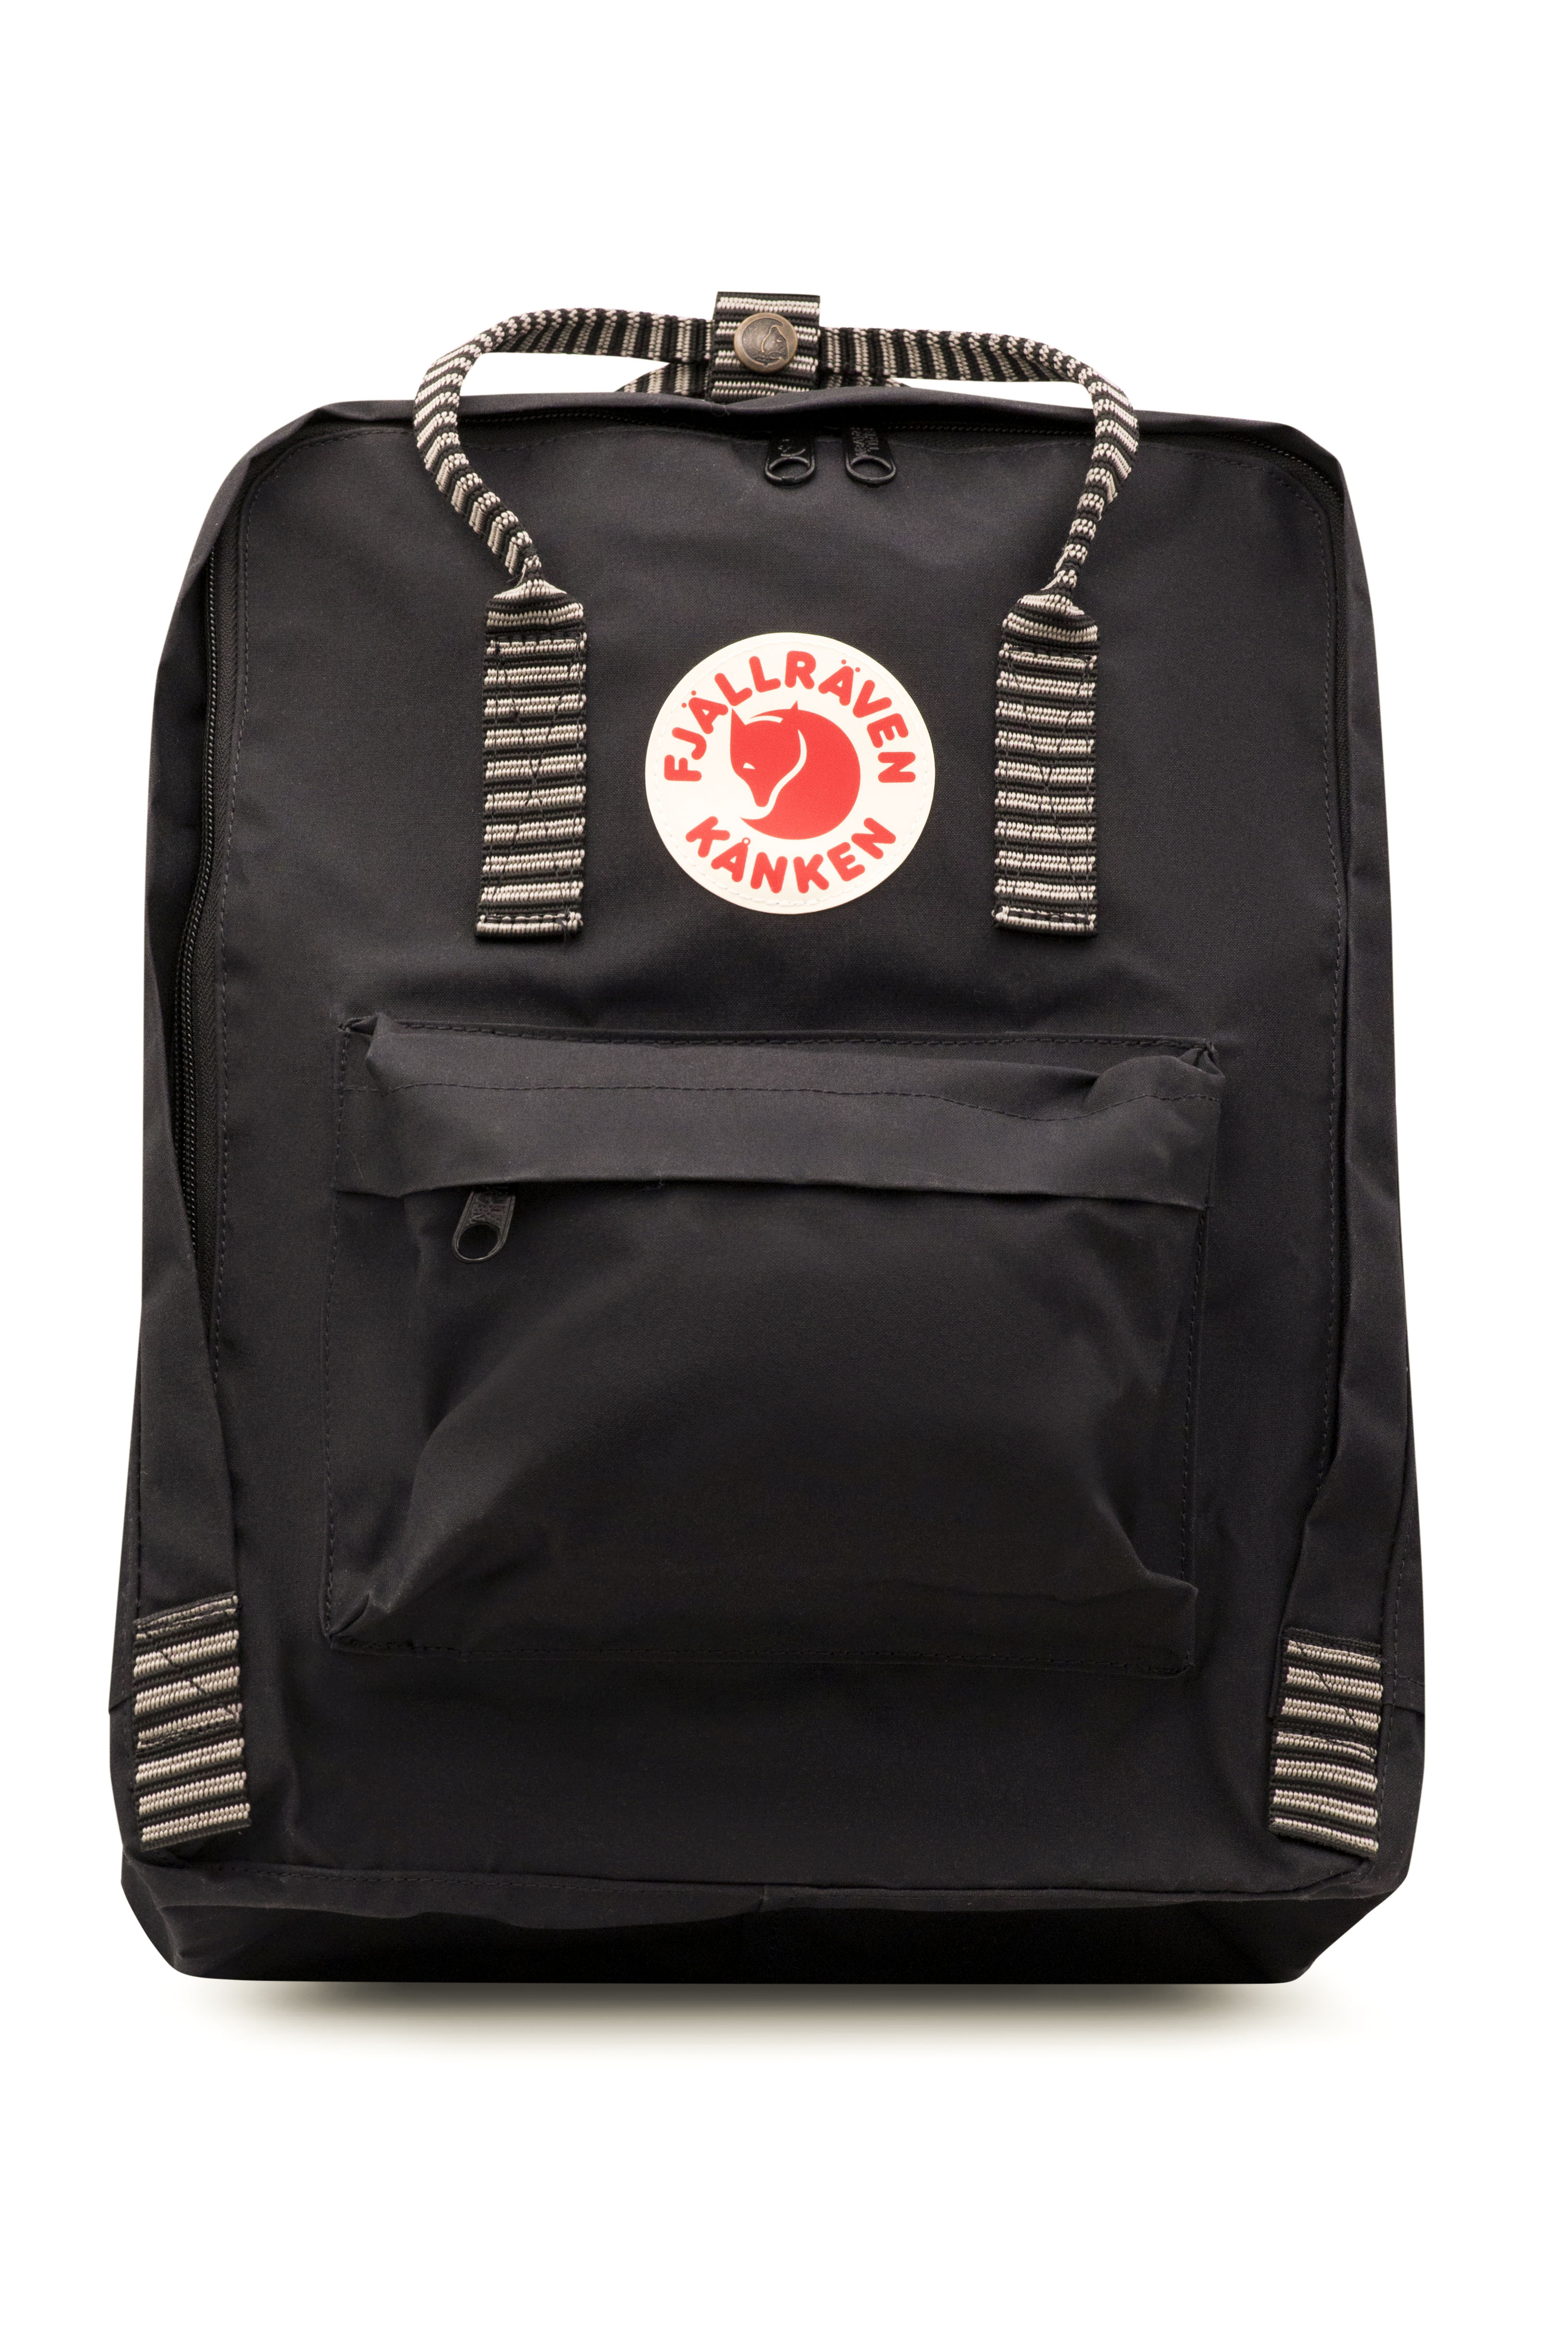 Fjallraven - Kanken Classic Backpack for Everyday - Black/Striped 7323450363277 eBay